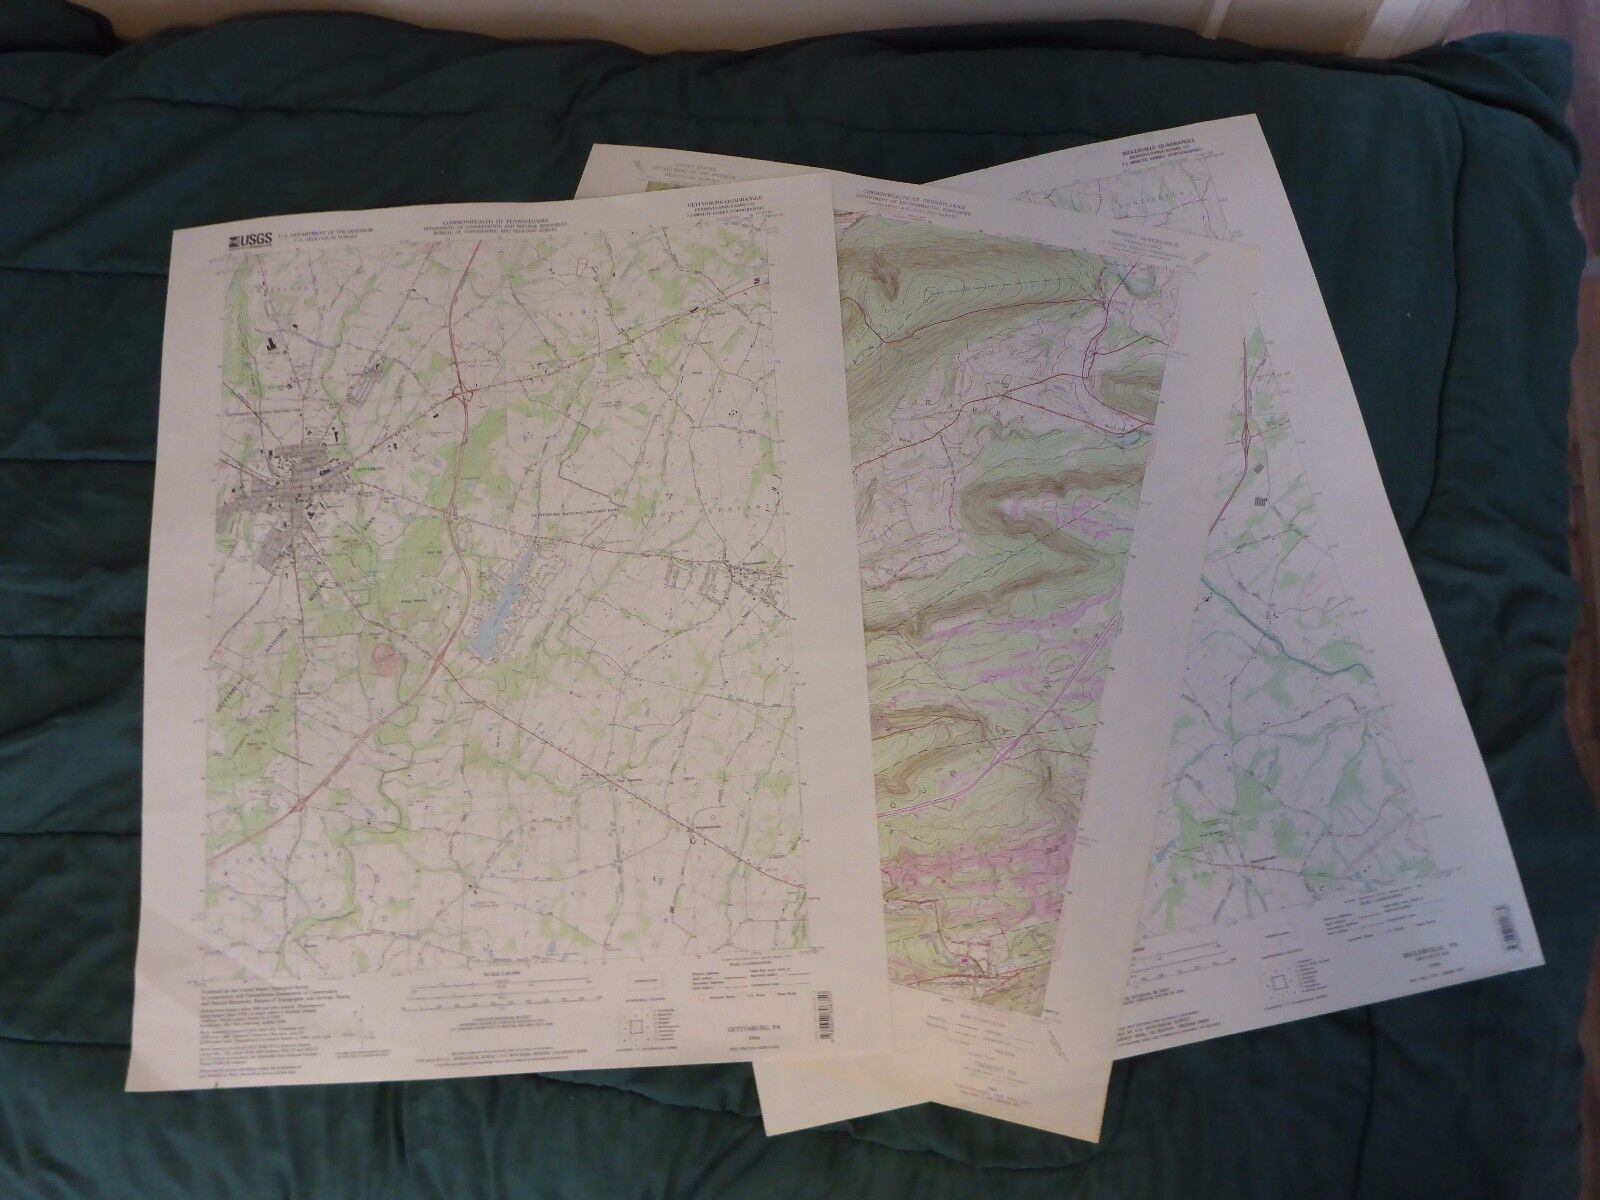 West Virginia USGS Topographic Quadrangle Maps - Multiple maps available